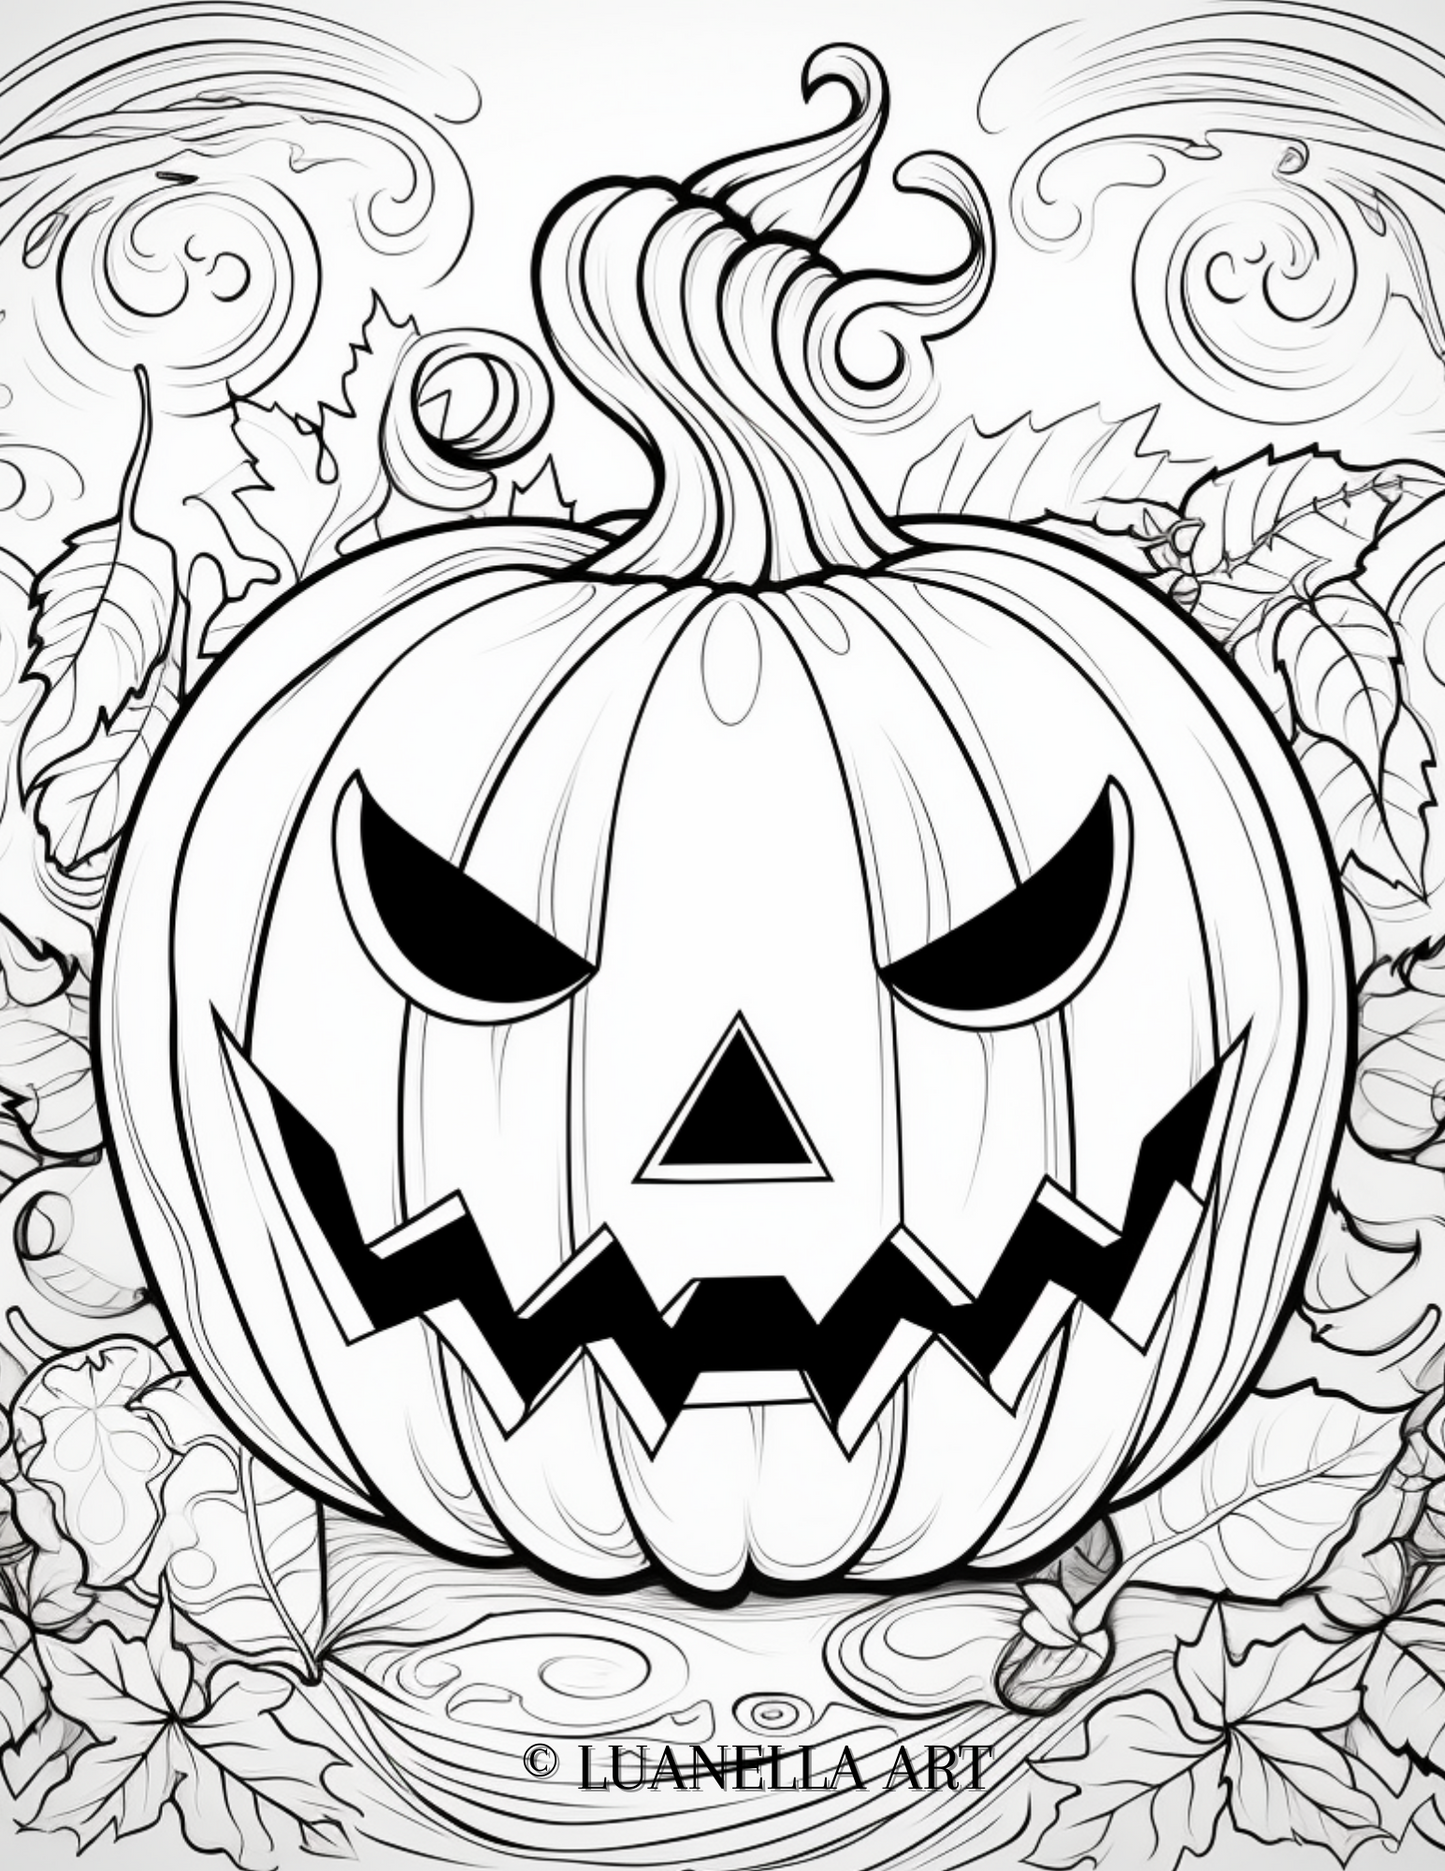 Carved Pumpkin | Coloring Page | Instant Digital Download